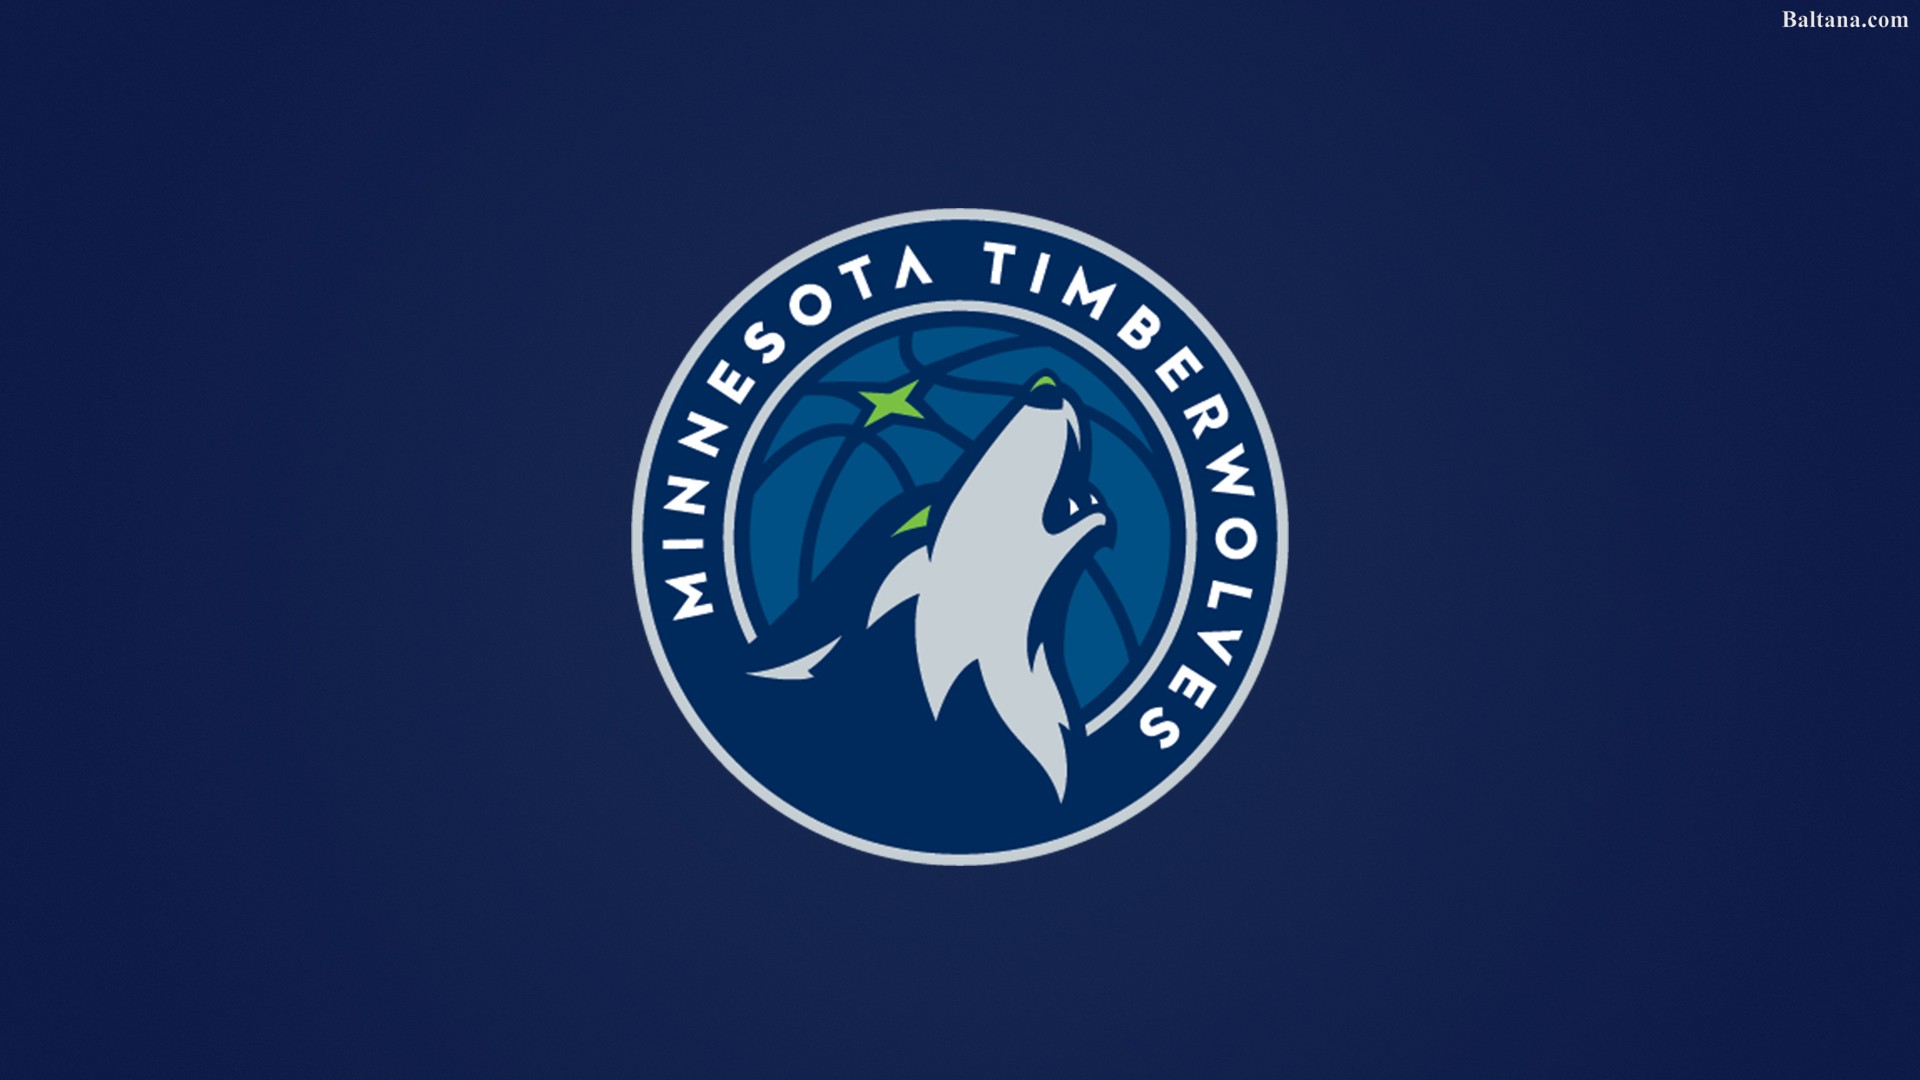 Minnesota Timberwolves High Definition Wallpaper - Minnesota Timberwolves New Logo - HD Wallpaper 